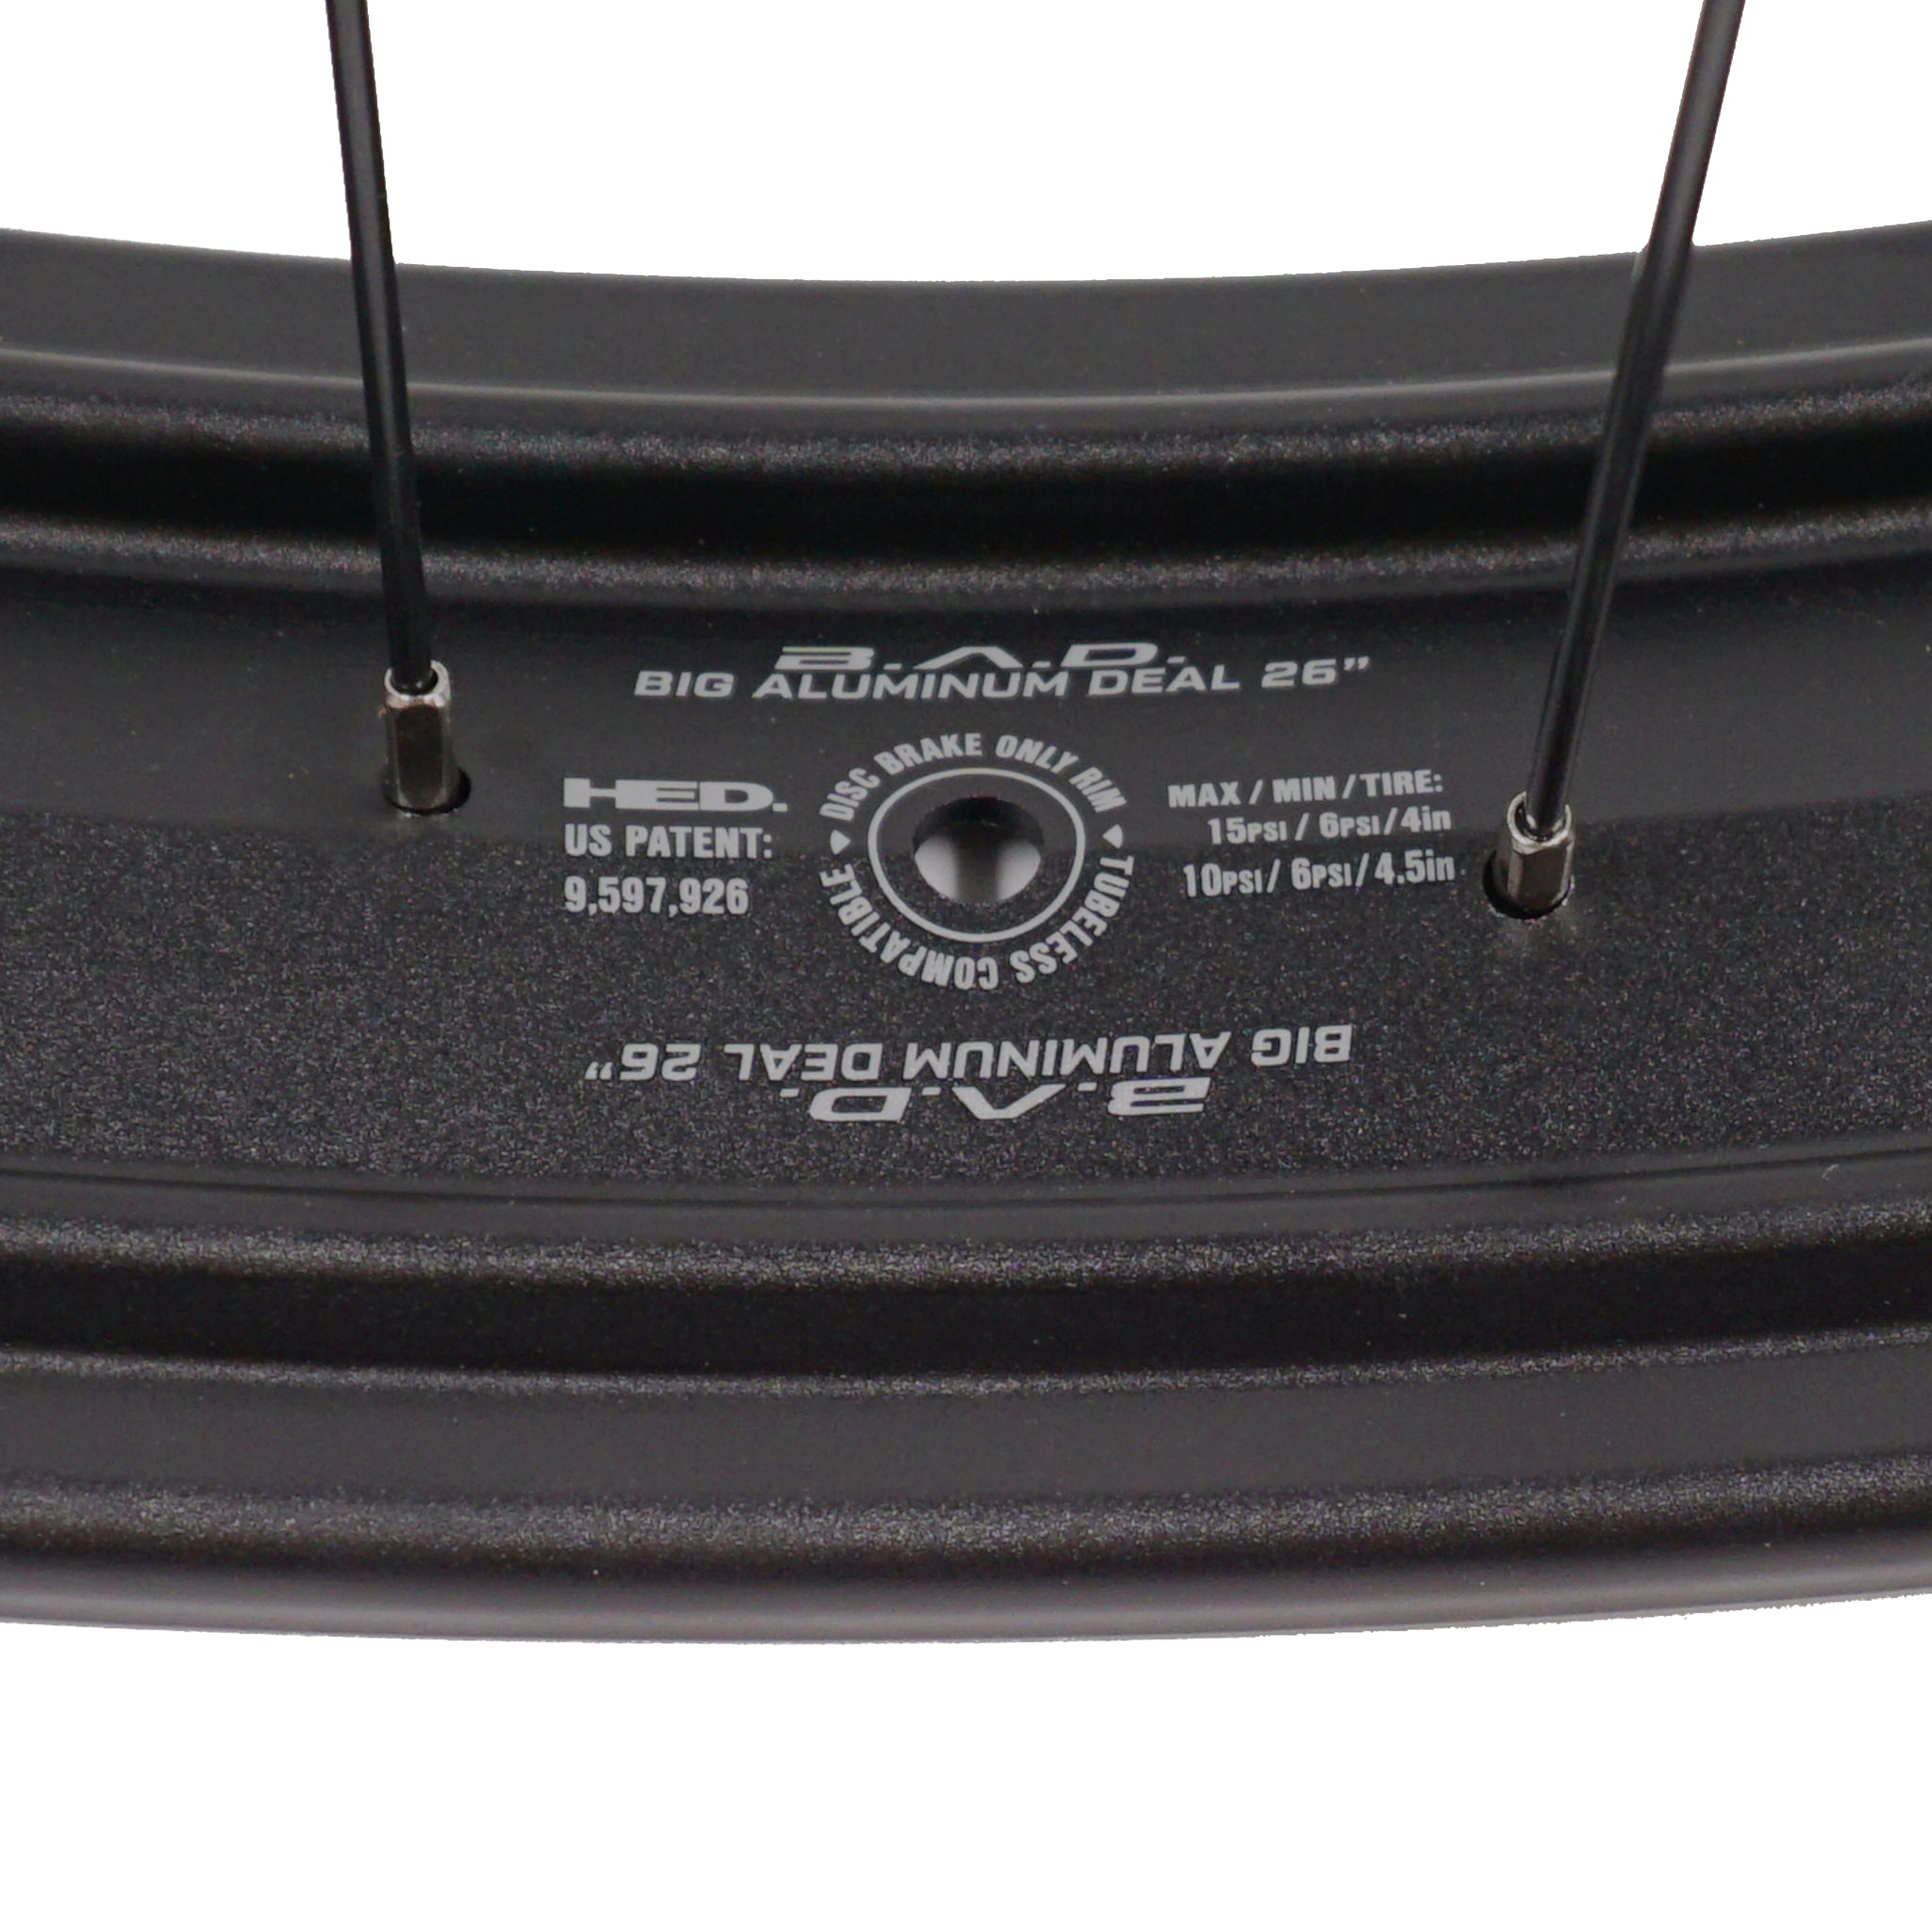 HED Big Aluminum Deal 26-inch REAR 12x197 TA Fat Bike Disc Wheel - The Bikesmiths